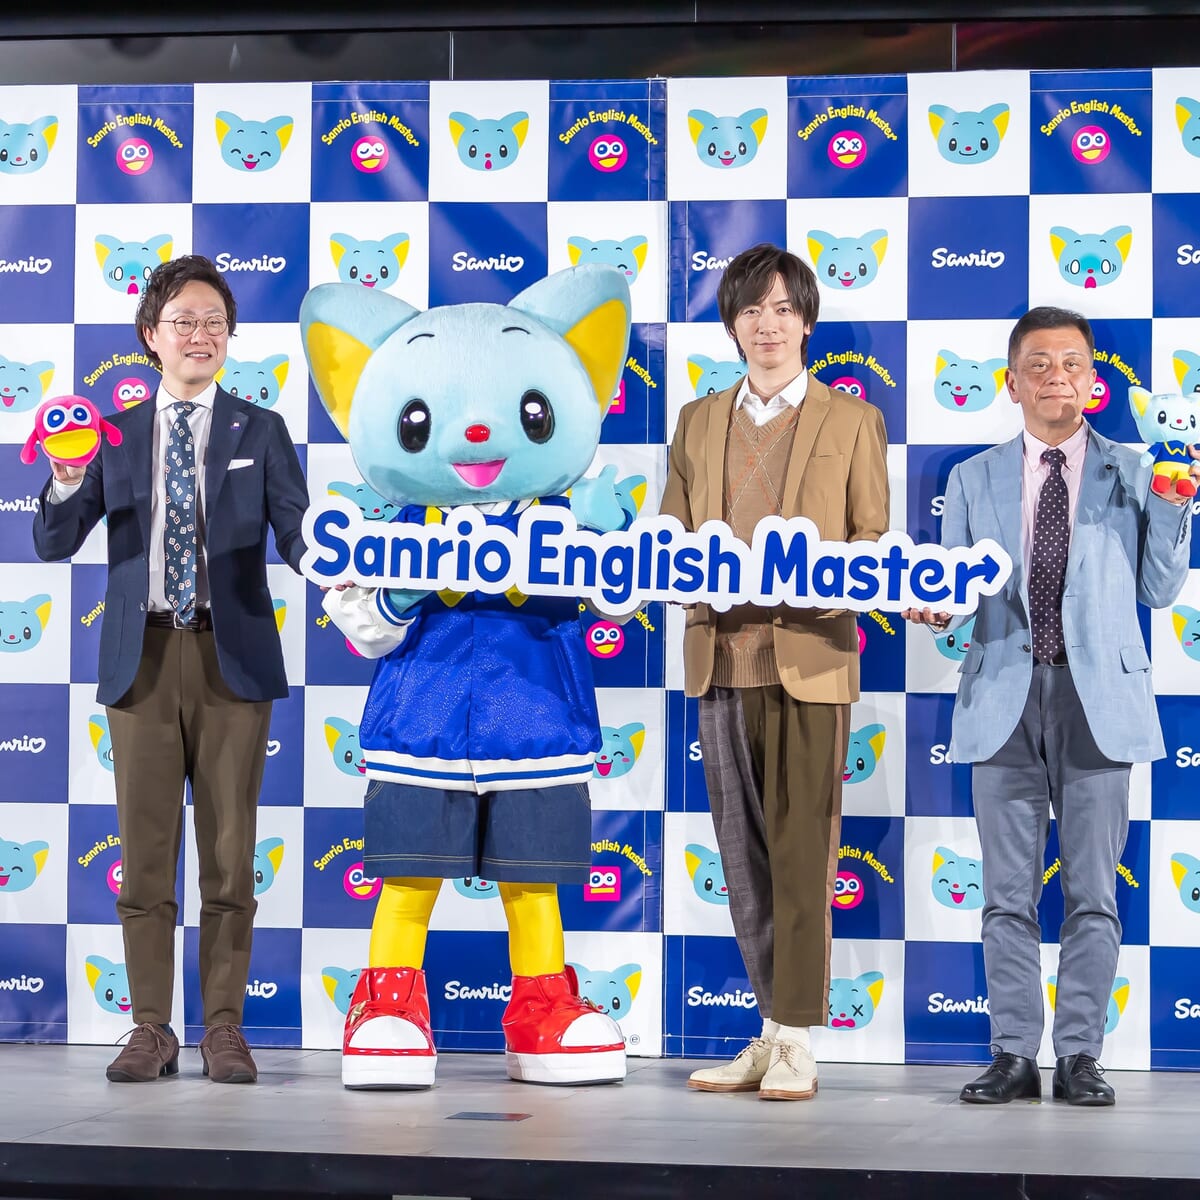 「Sanrio English Master」サービス発表会